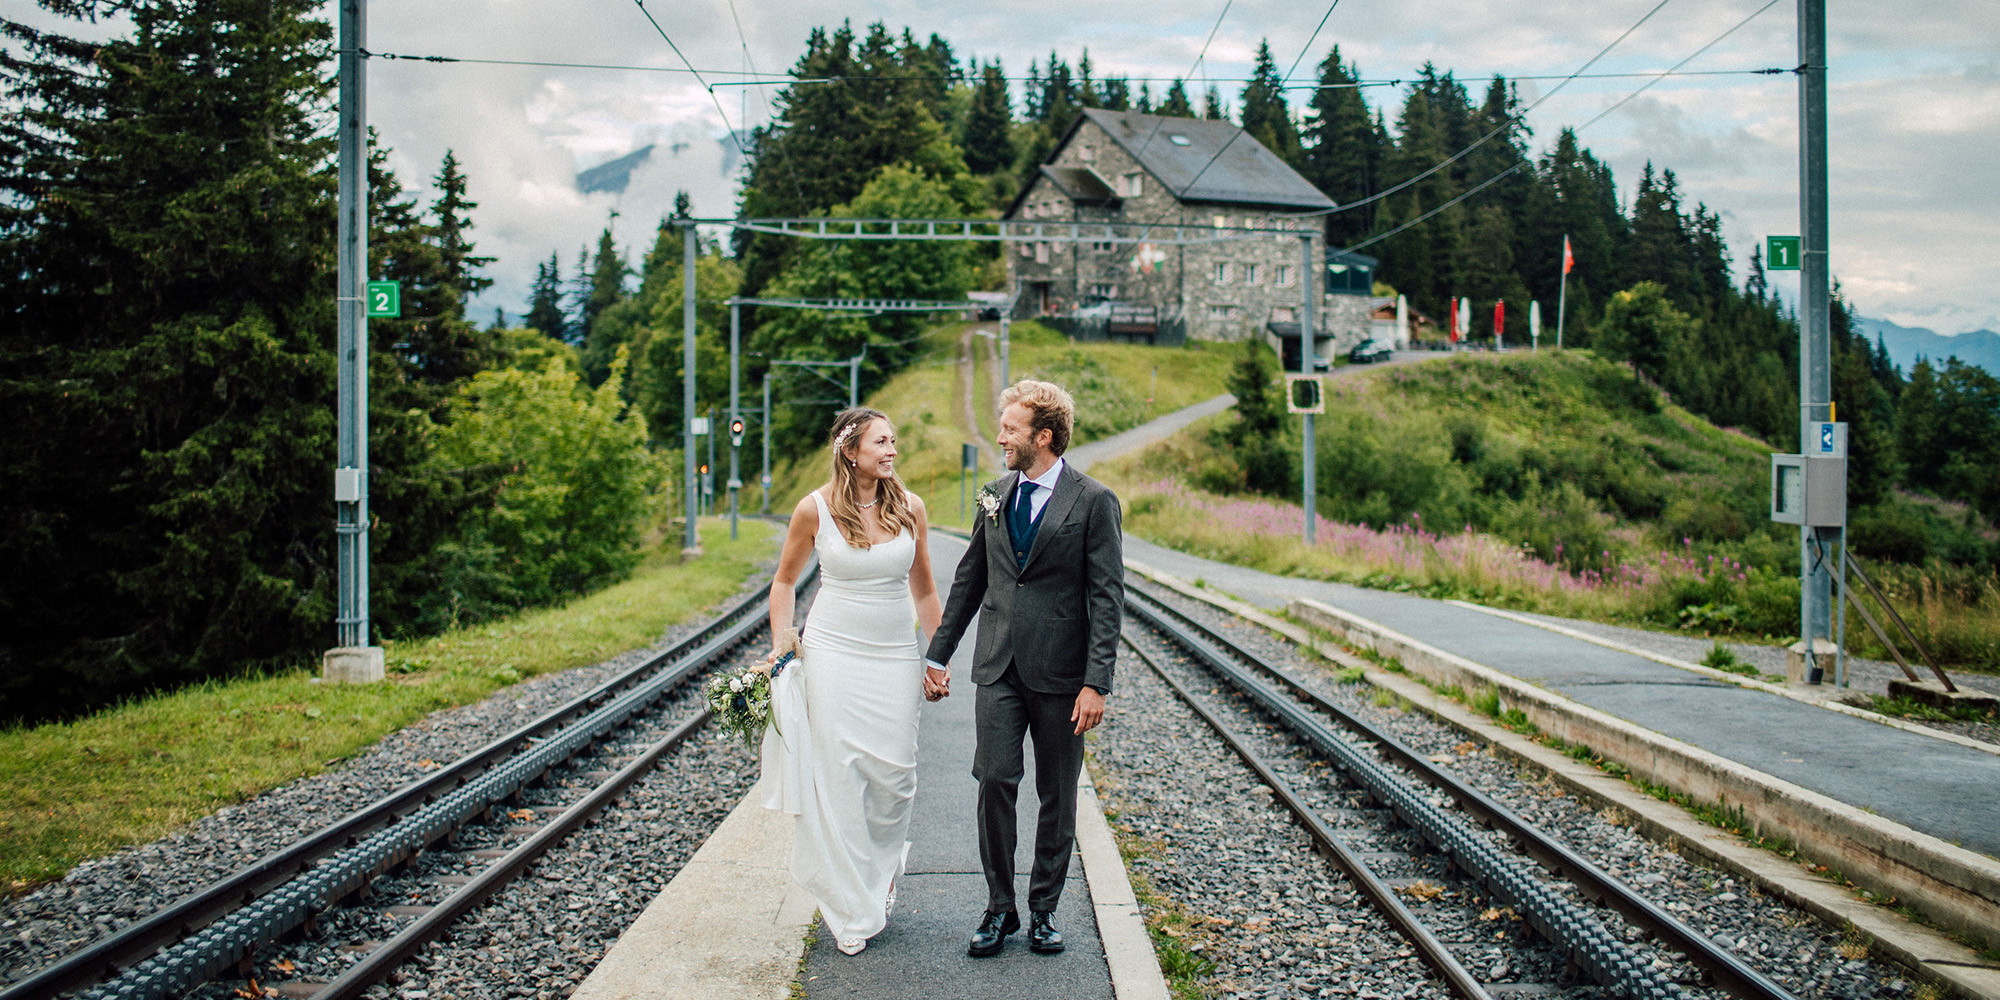 Destination Wedding in the Swiss Alps